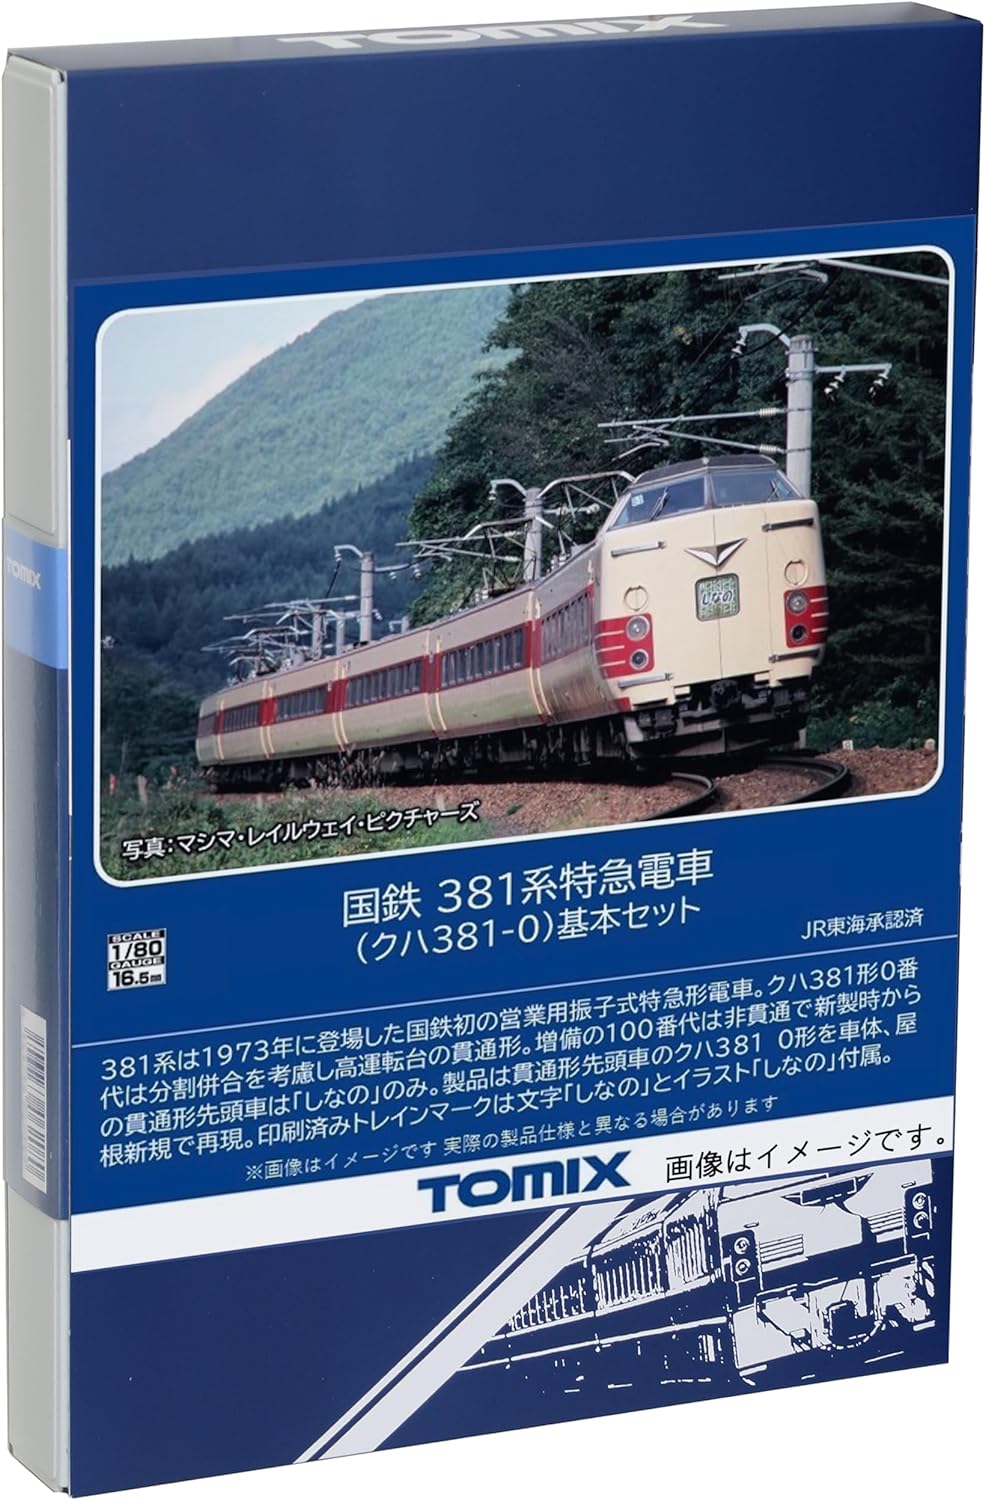 TOMIX HO-9083 HO Gauge JNR 381 Series (Kuha 381-0) Basic Set Railway Model Train - BanzaiHobby